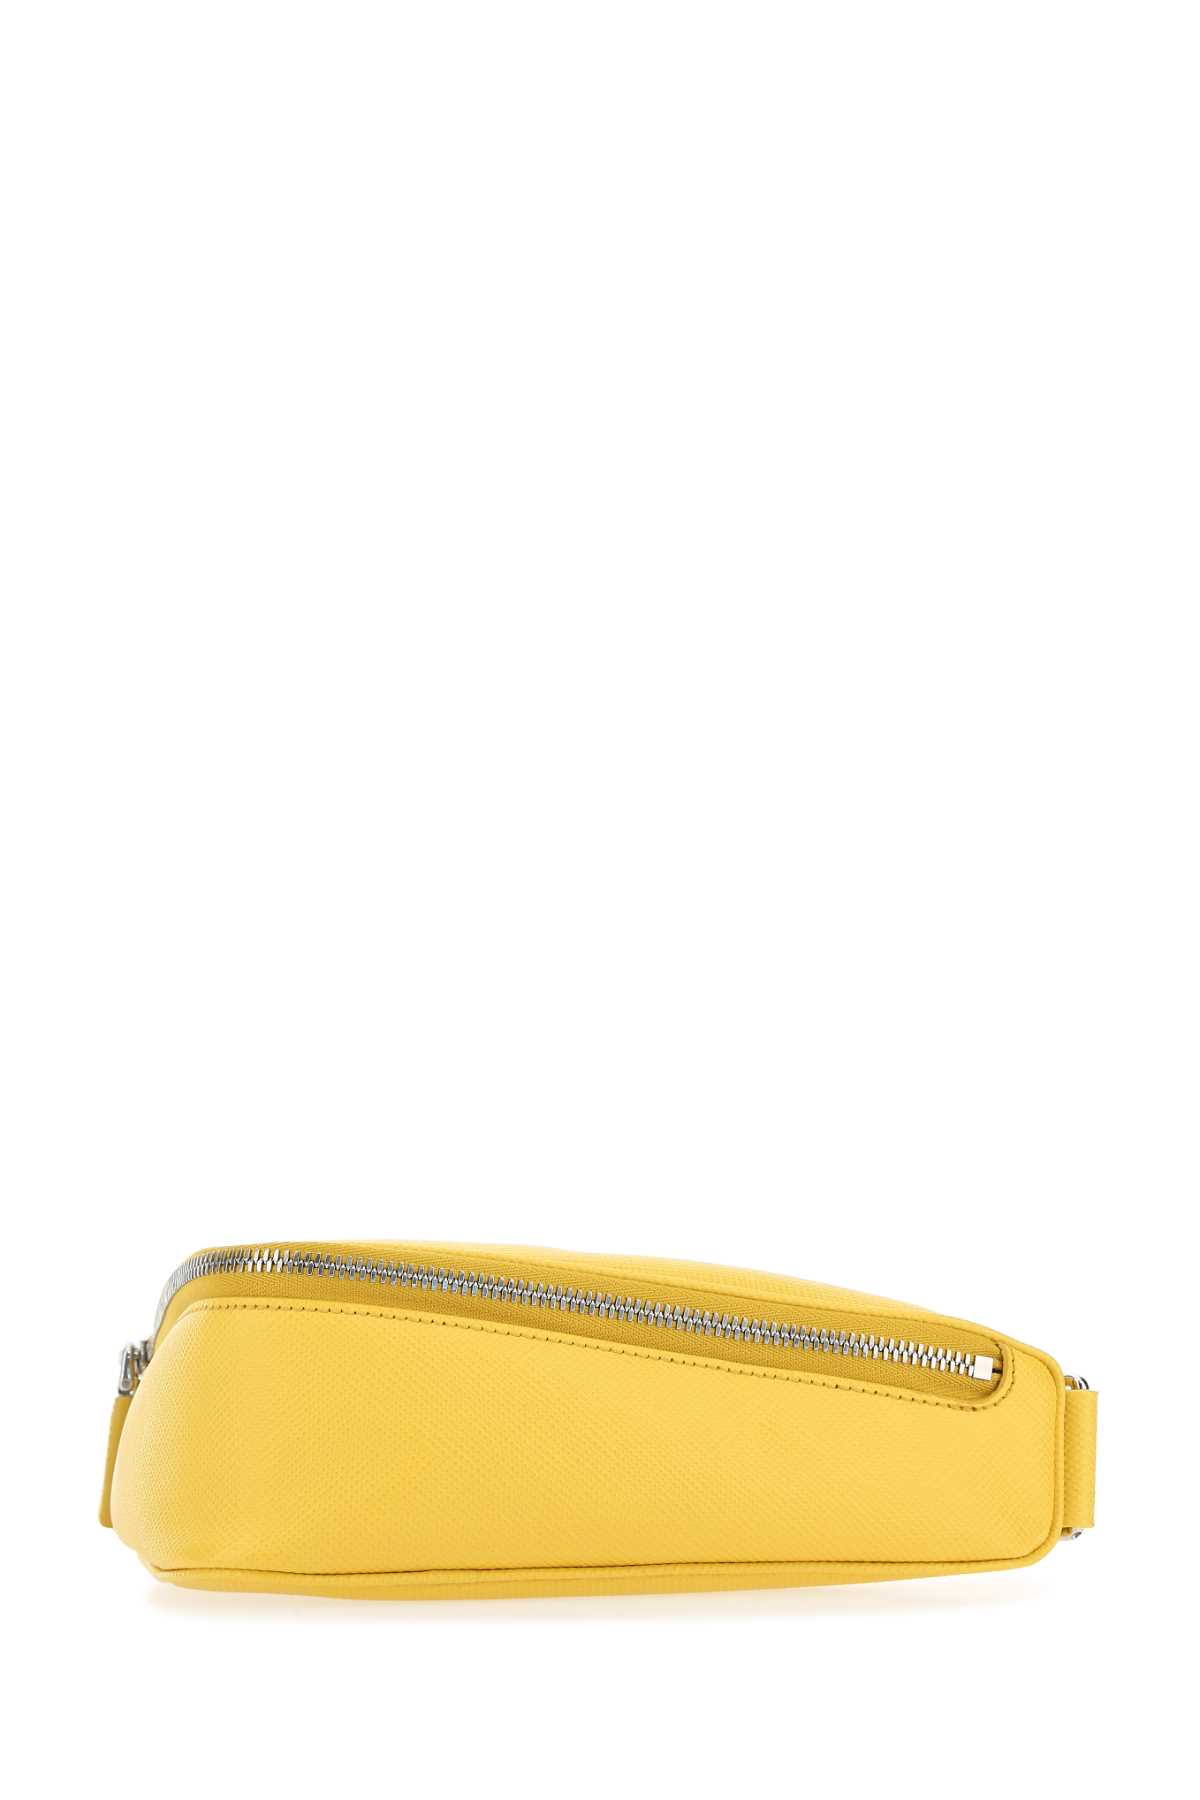 Prada Yellow Leather Belt Bag In F0377